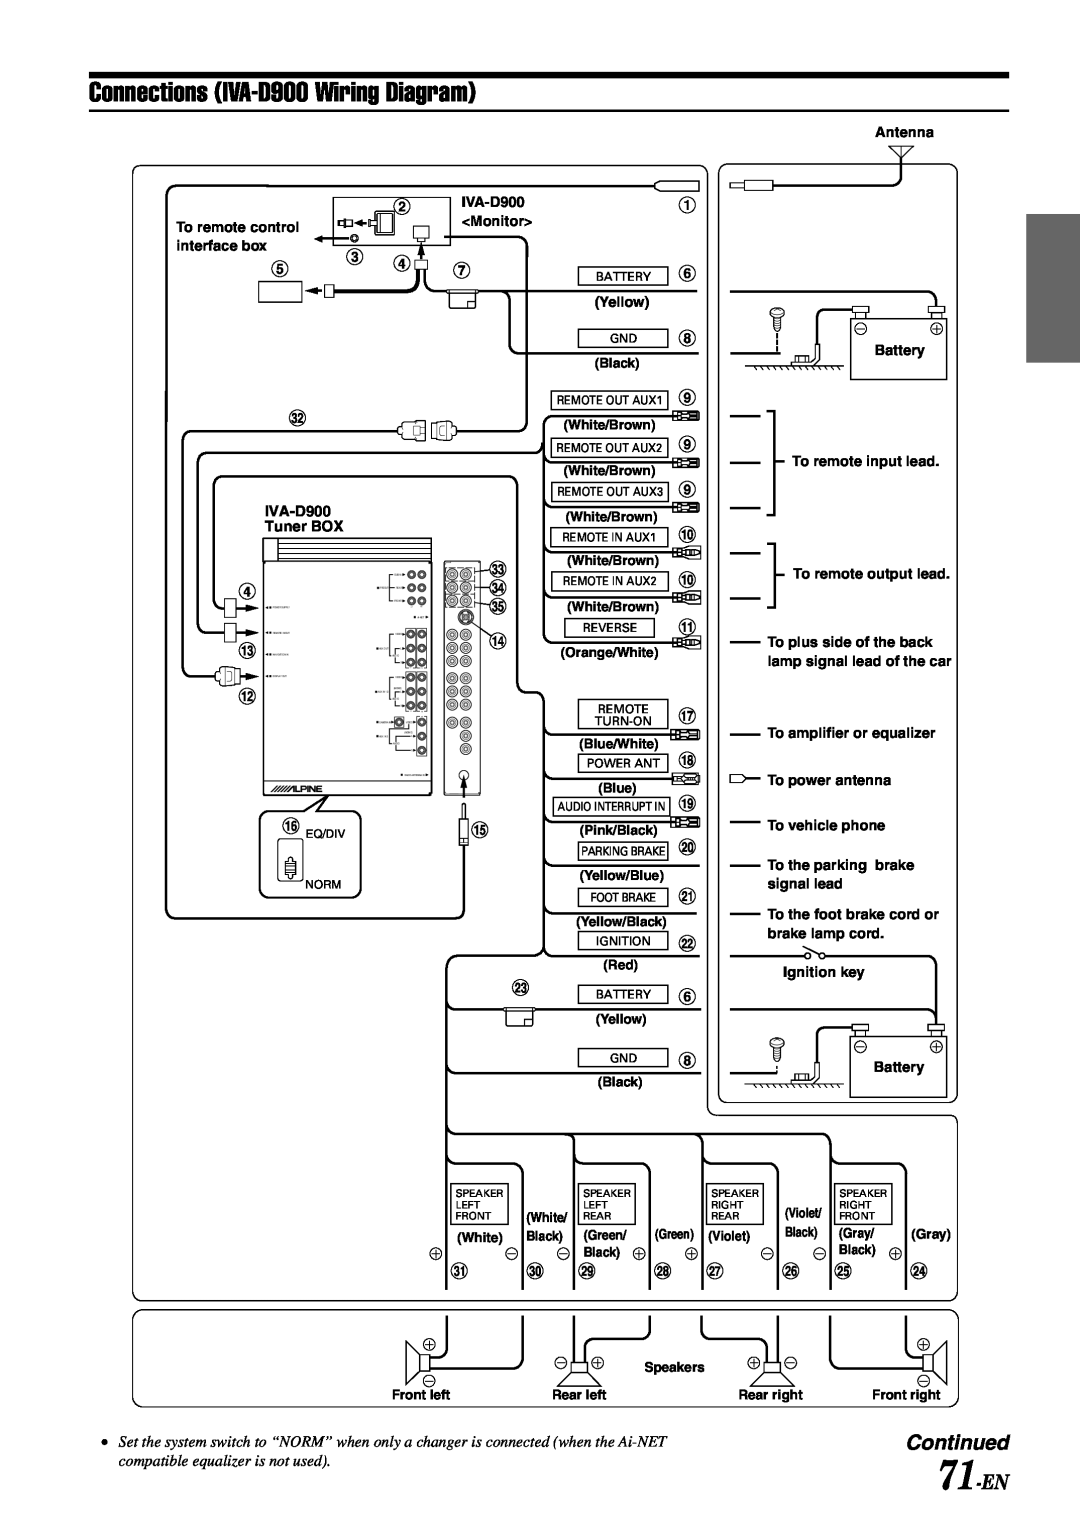 Alpine owner manual Connections IVA-D900Wiring Diagram, 71-EN 